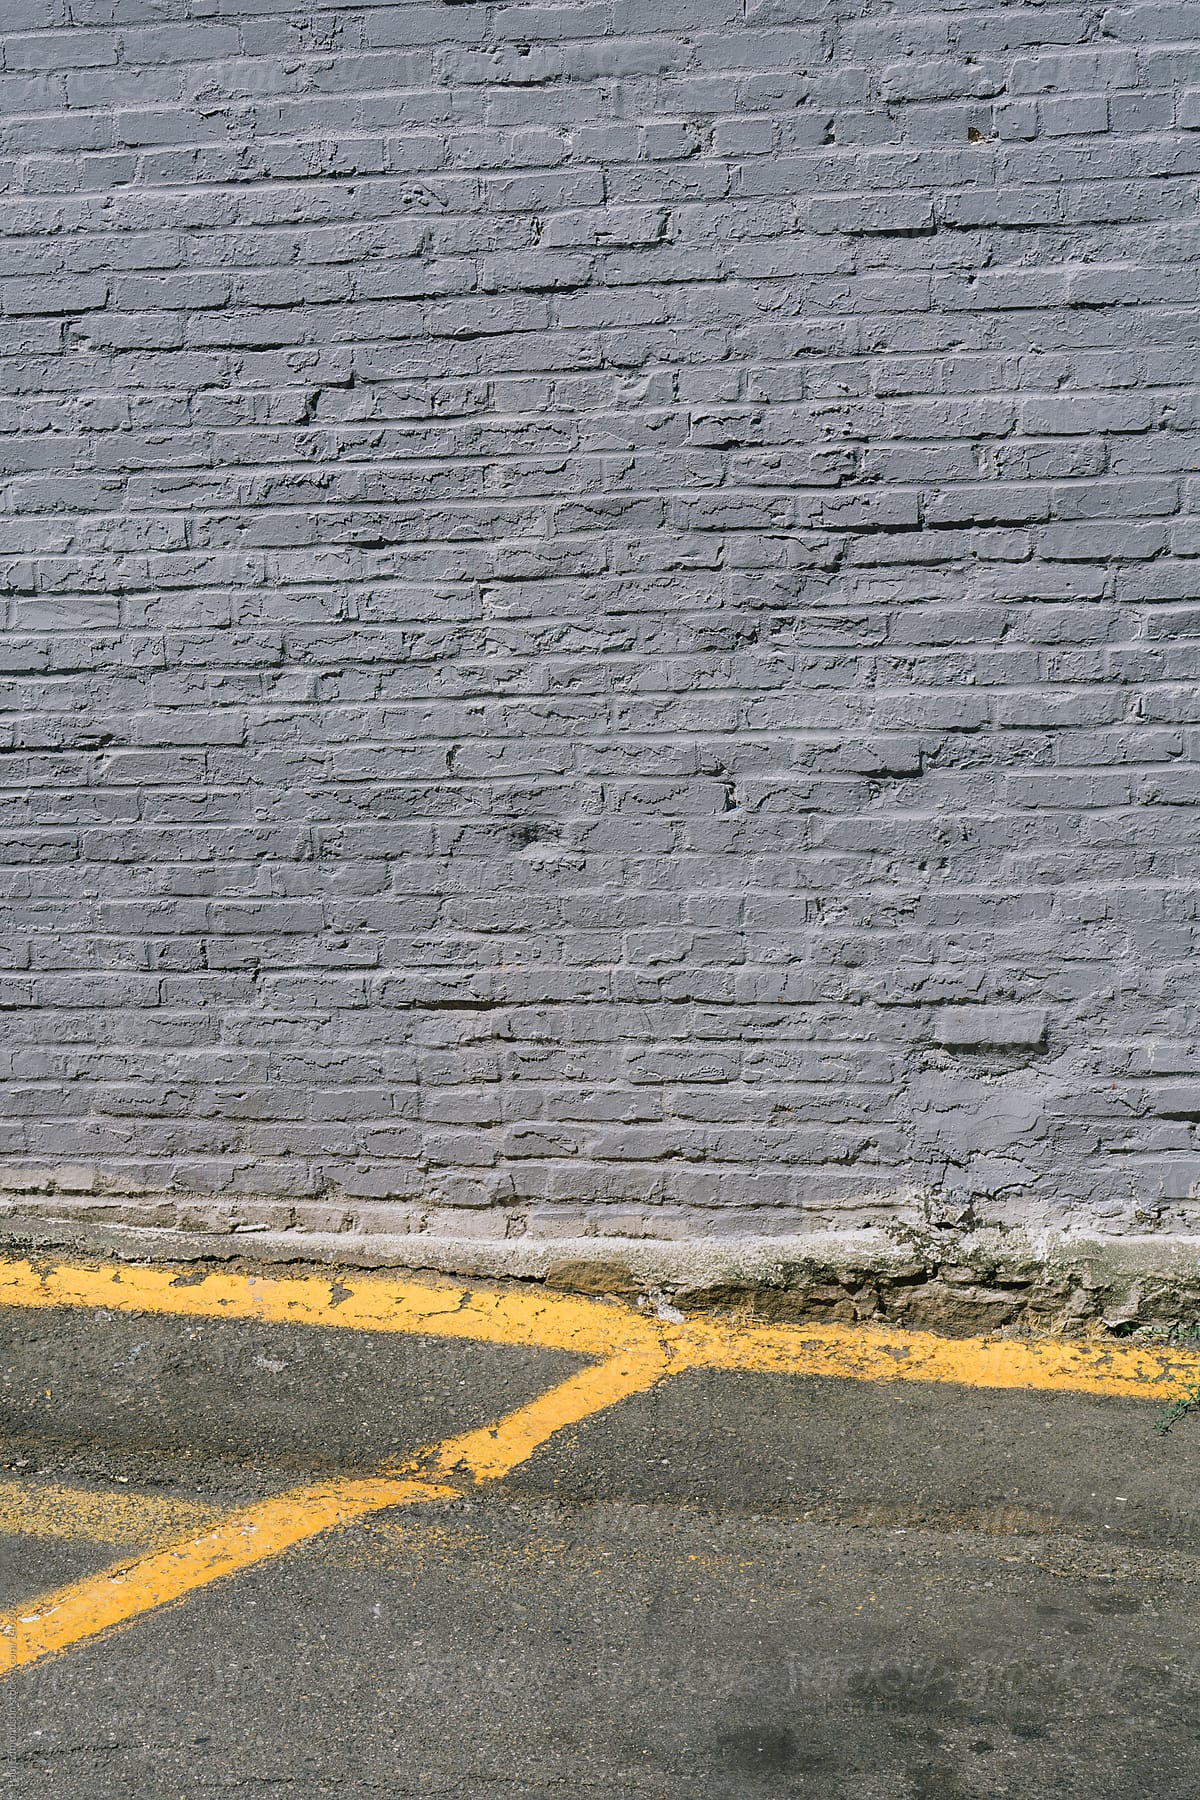 Detail o parking lot and painted grey brick wall